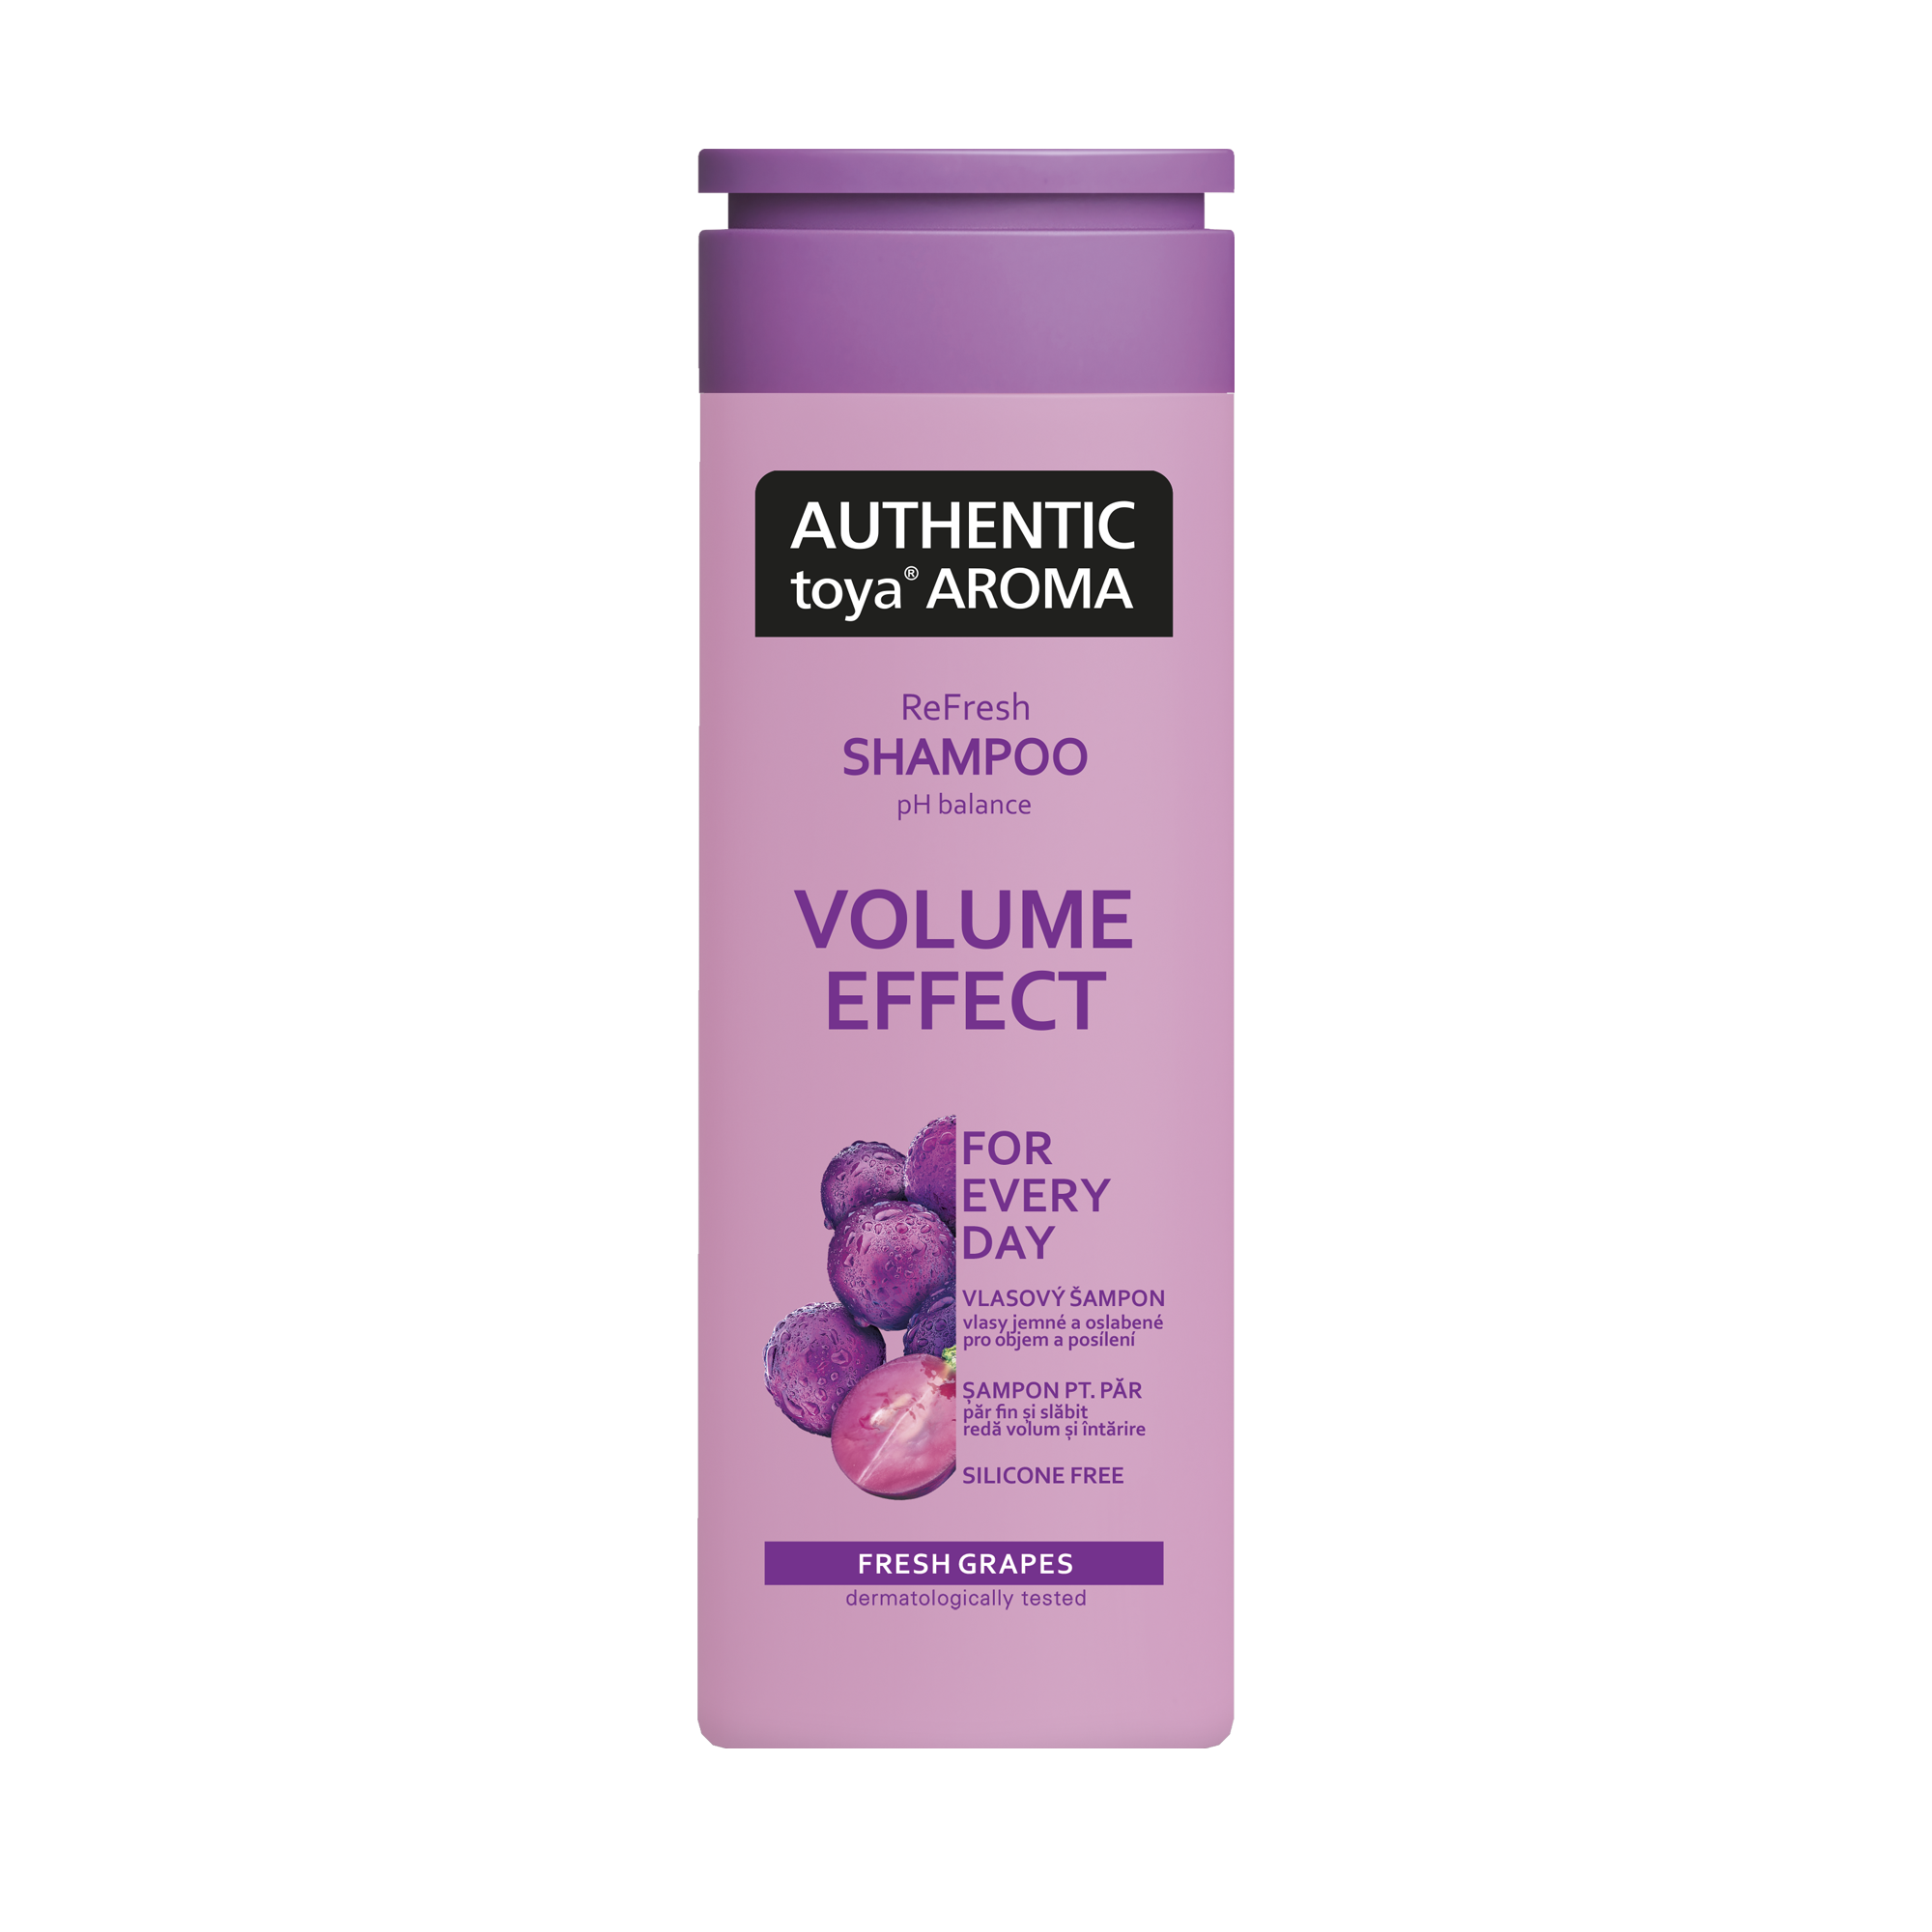 AUTHENTIC toya AROMA Volume Effect shampoo